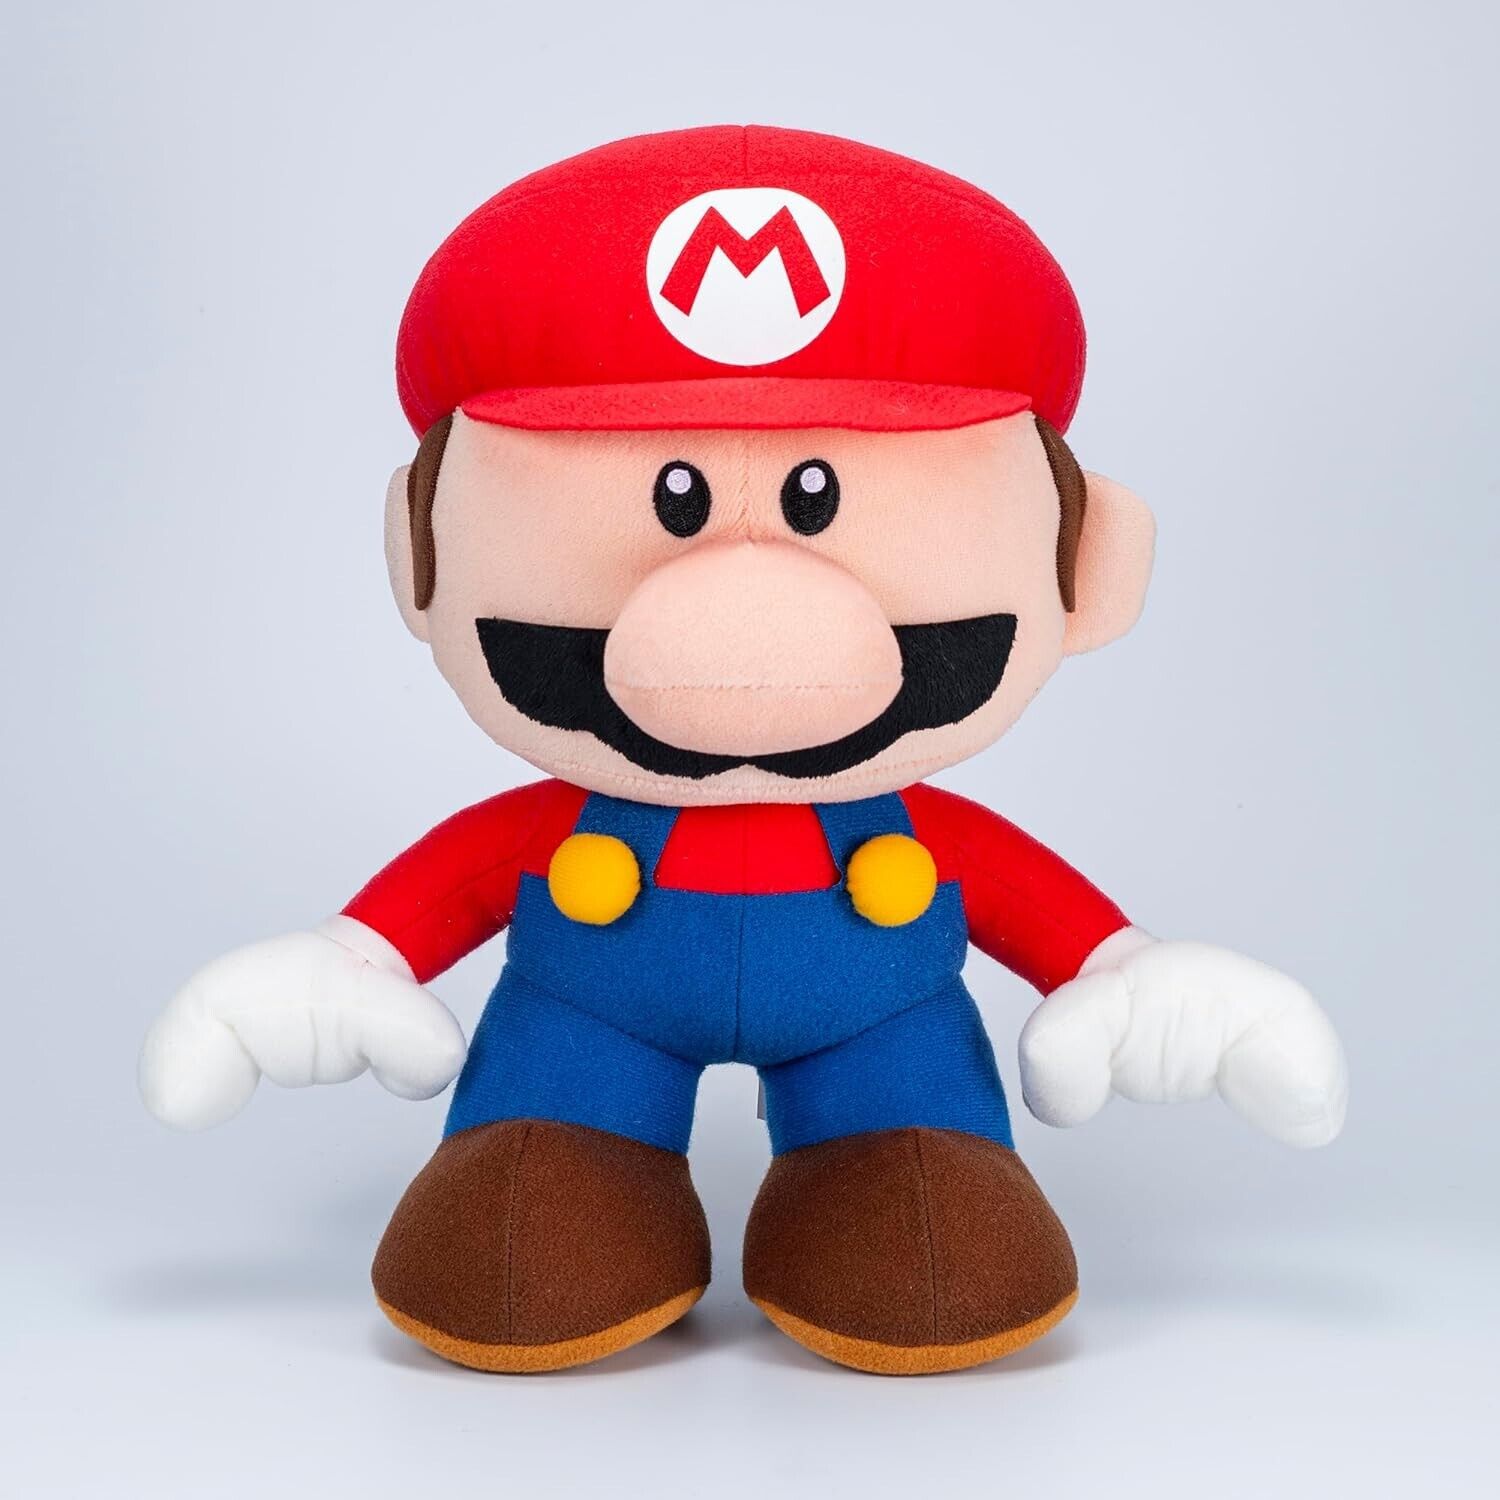 EPOCH Nintendo Mario vs. Donkey Kong Mini Mario Plush Toy L Size 11 inch Japan